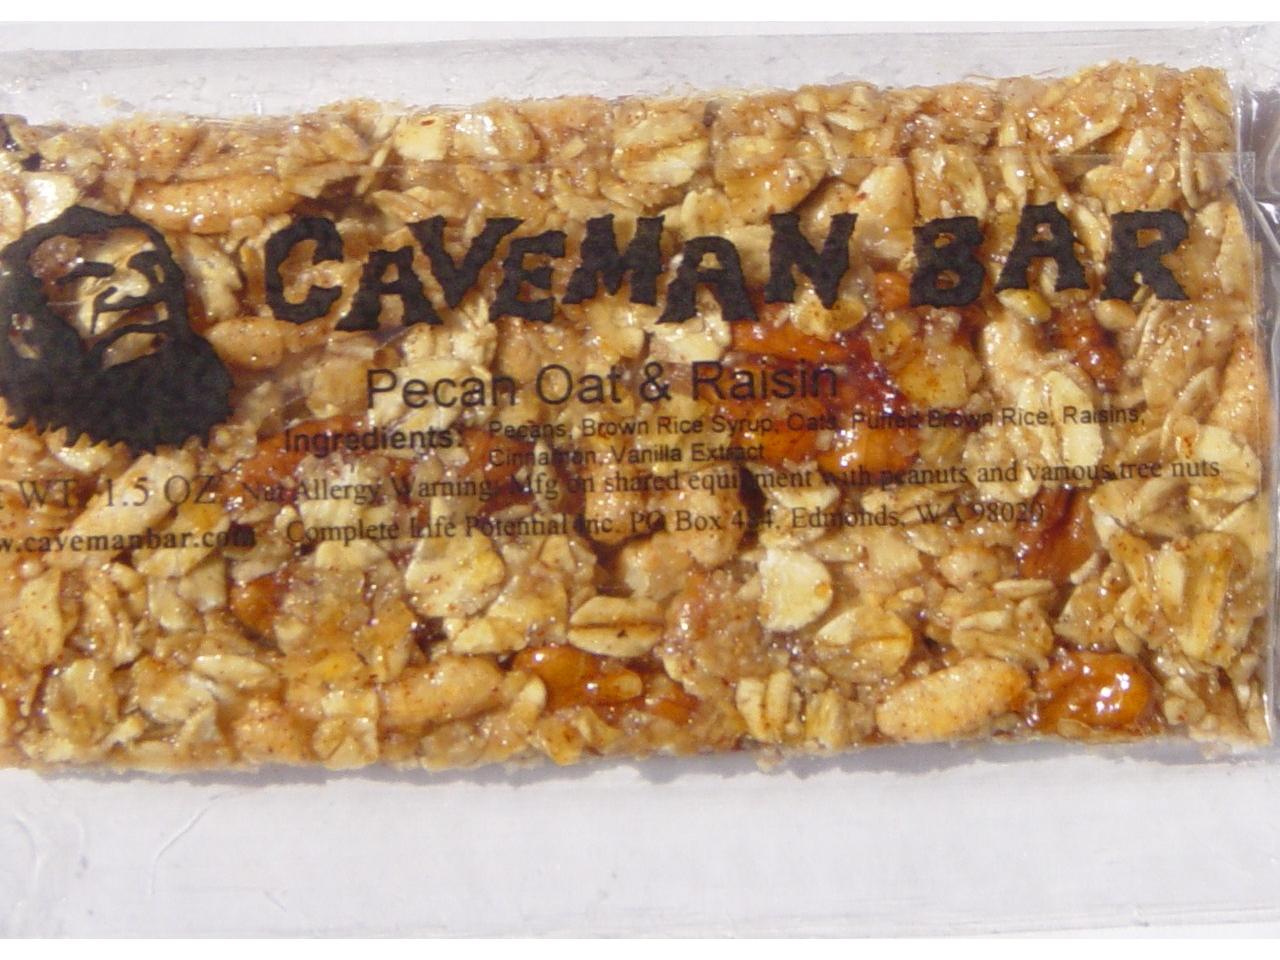 обои Pecan oat & raisis cavemannbar фото